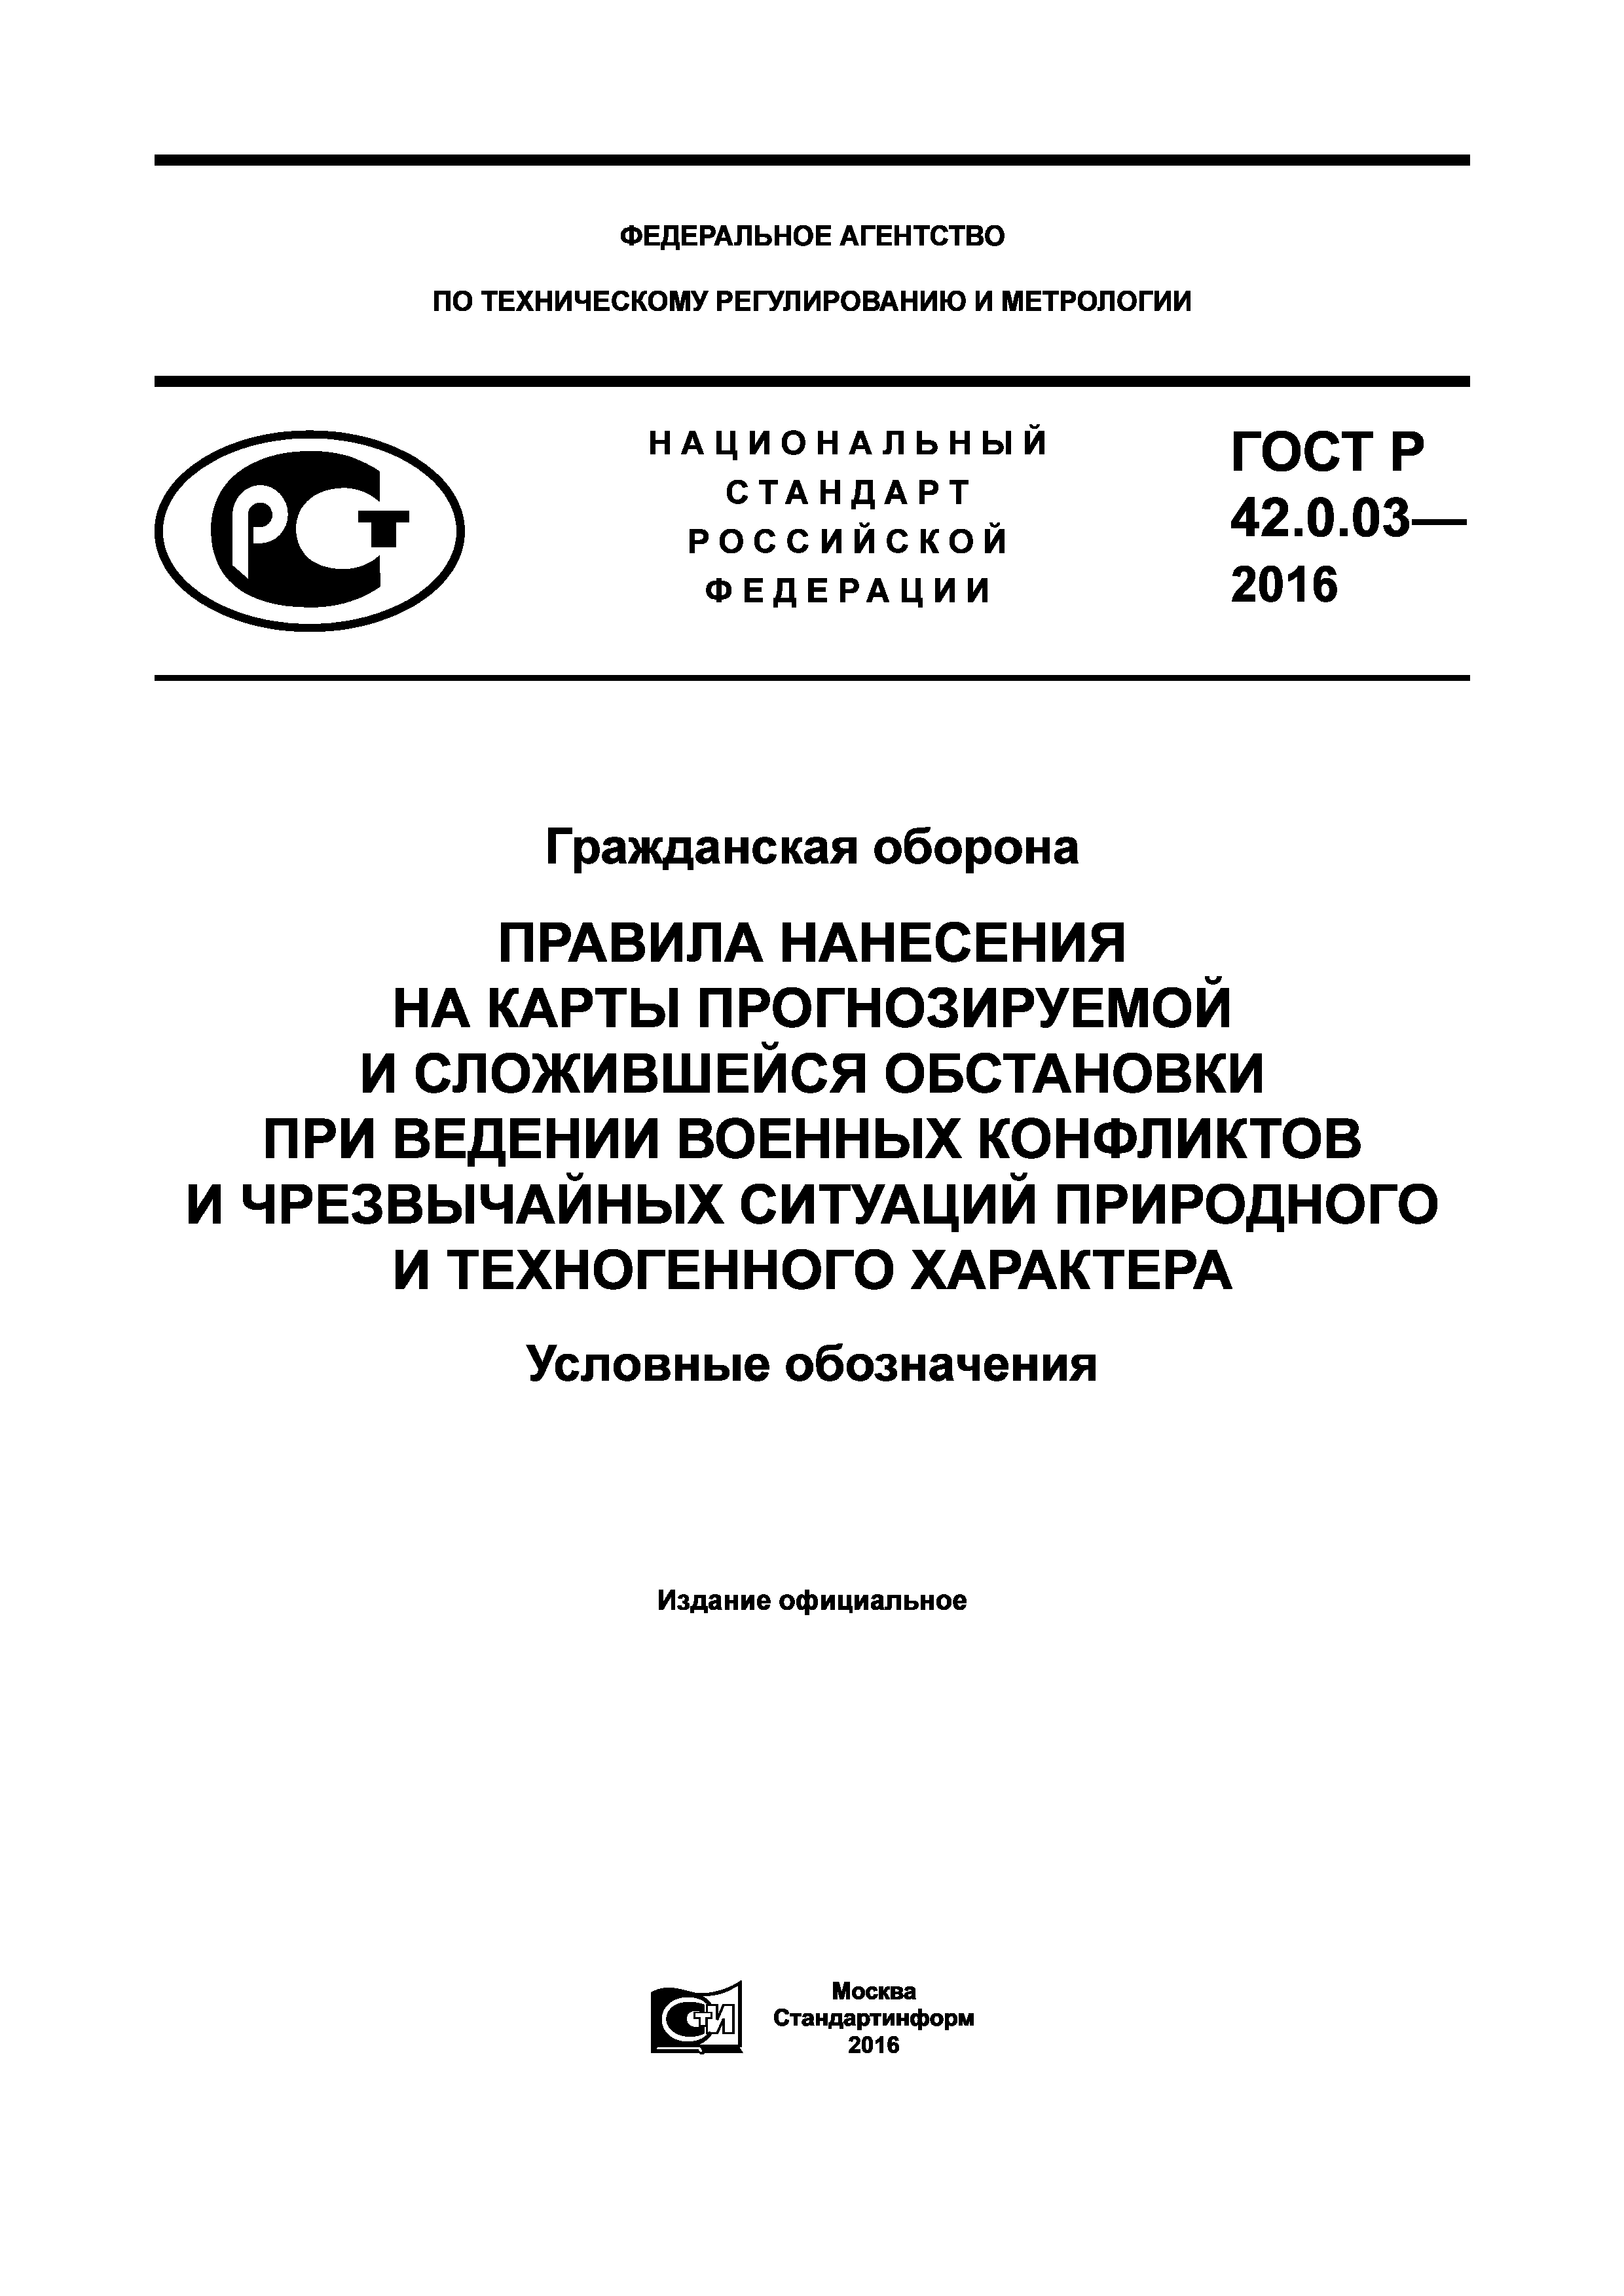 ГОСТ Р 42.0.03-2016